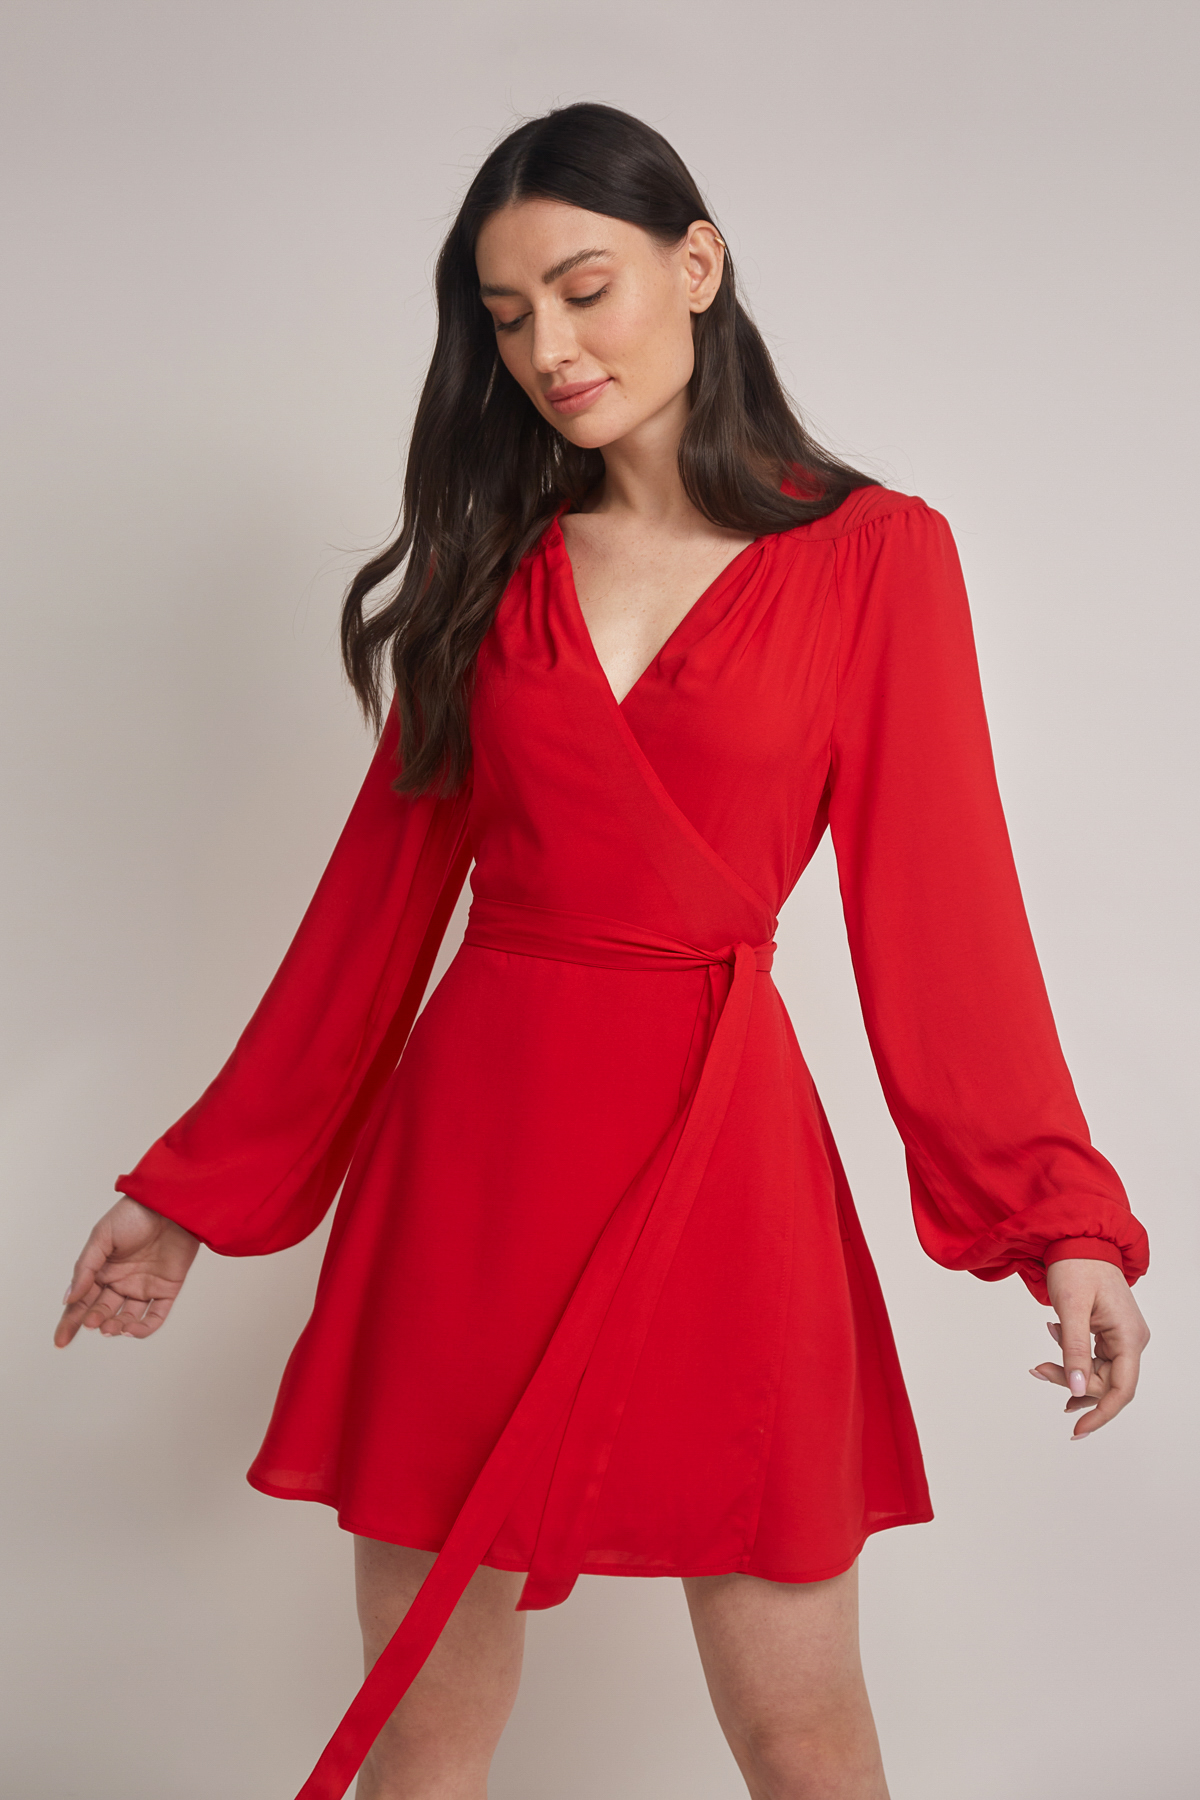 Red short dress, photo 1